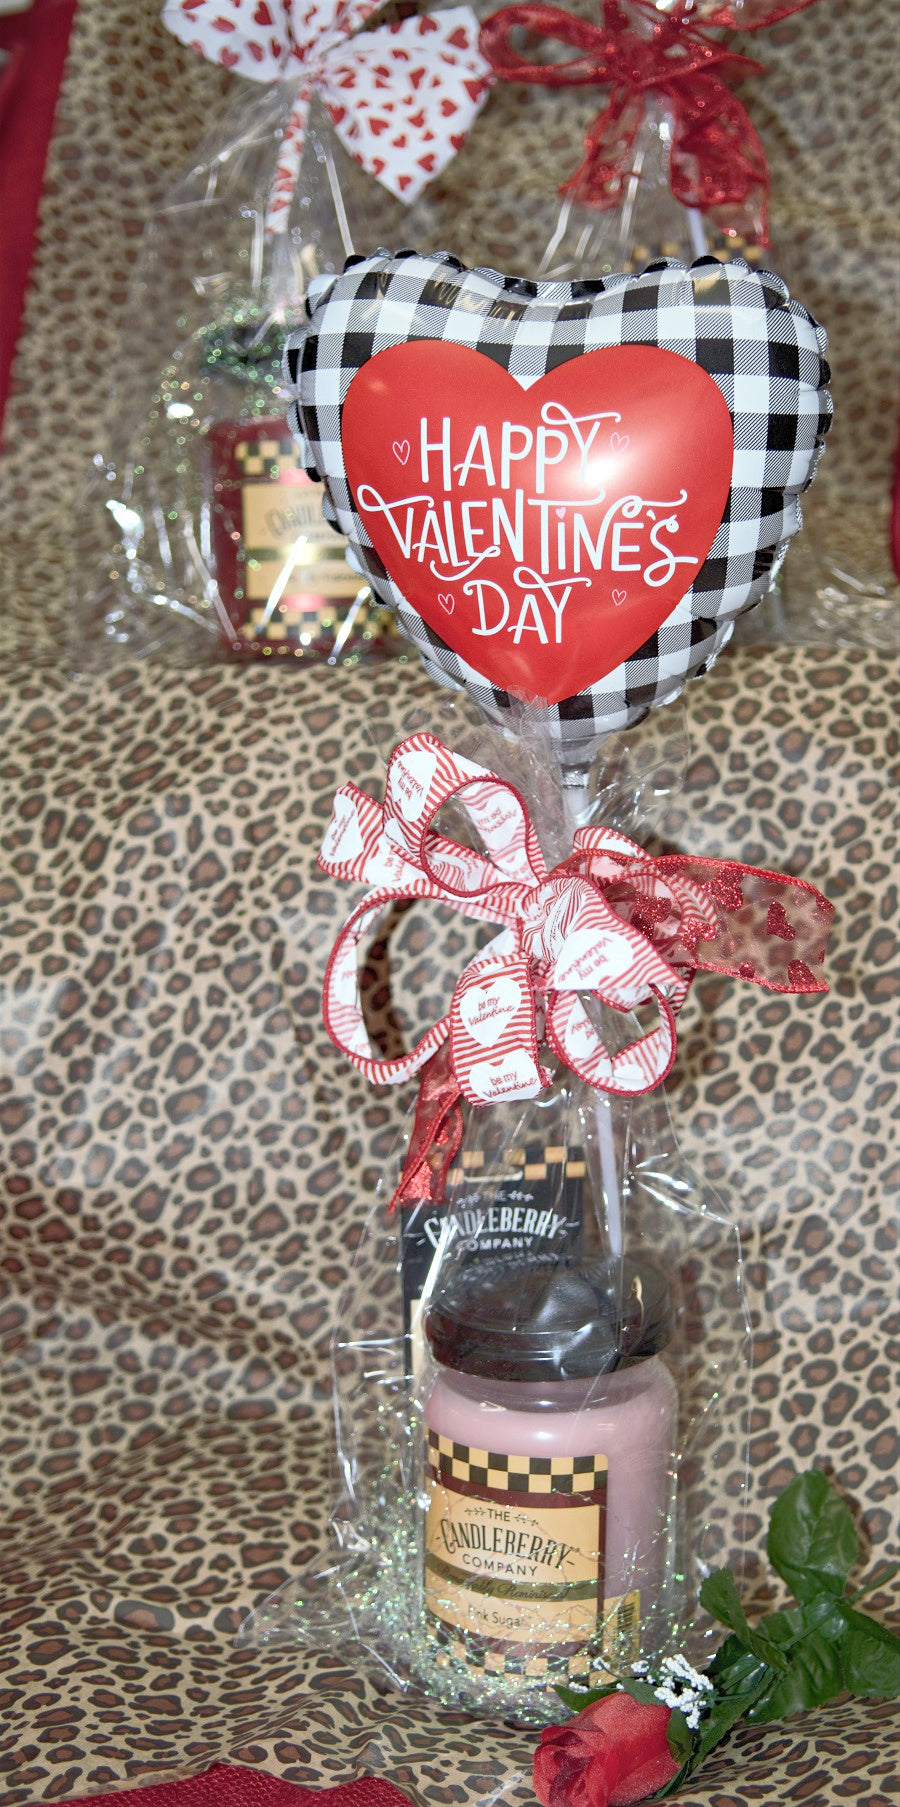 Valentine's Day Candle/Car Freshener Gift Set